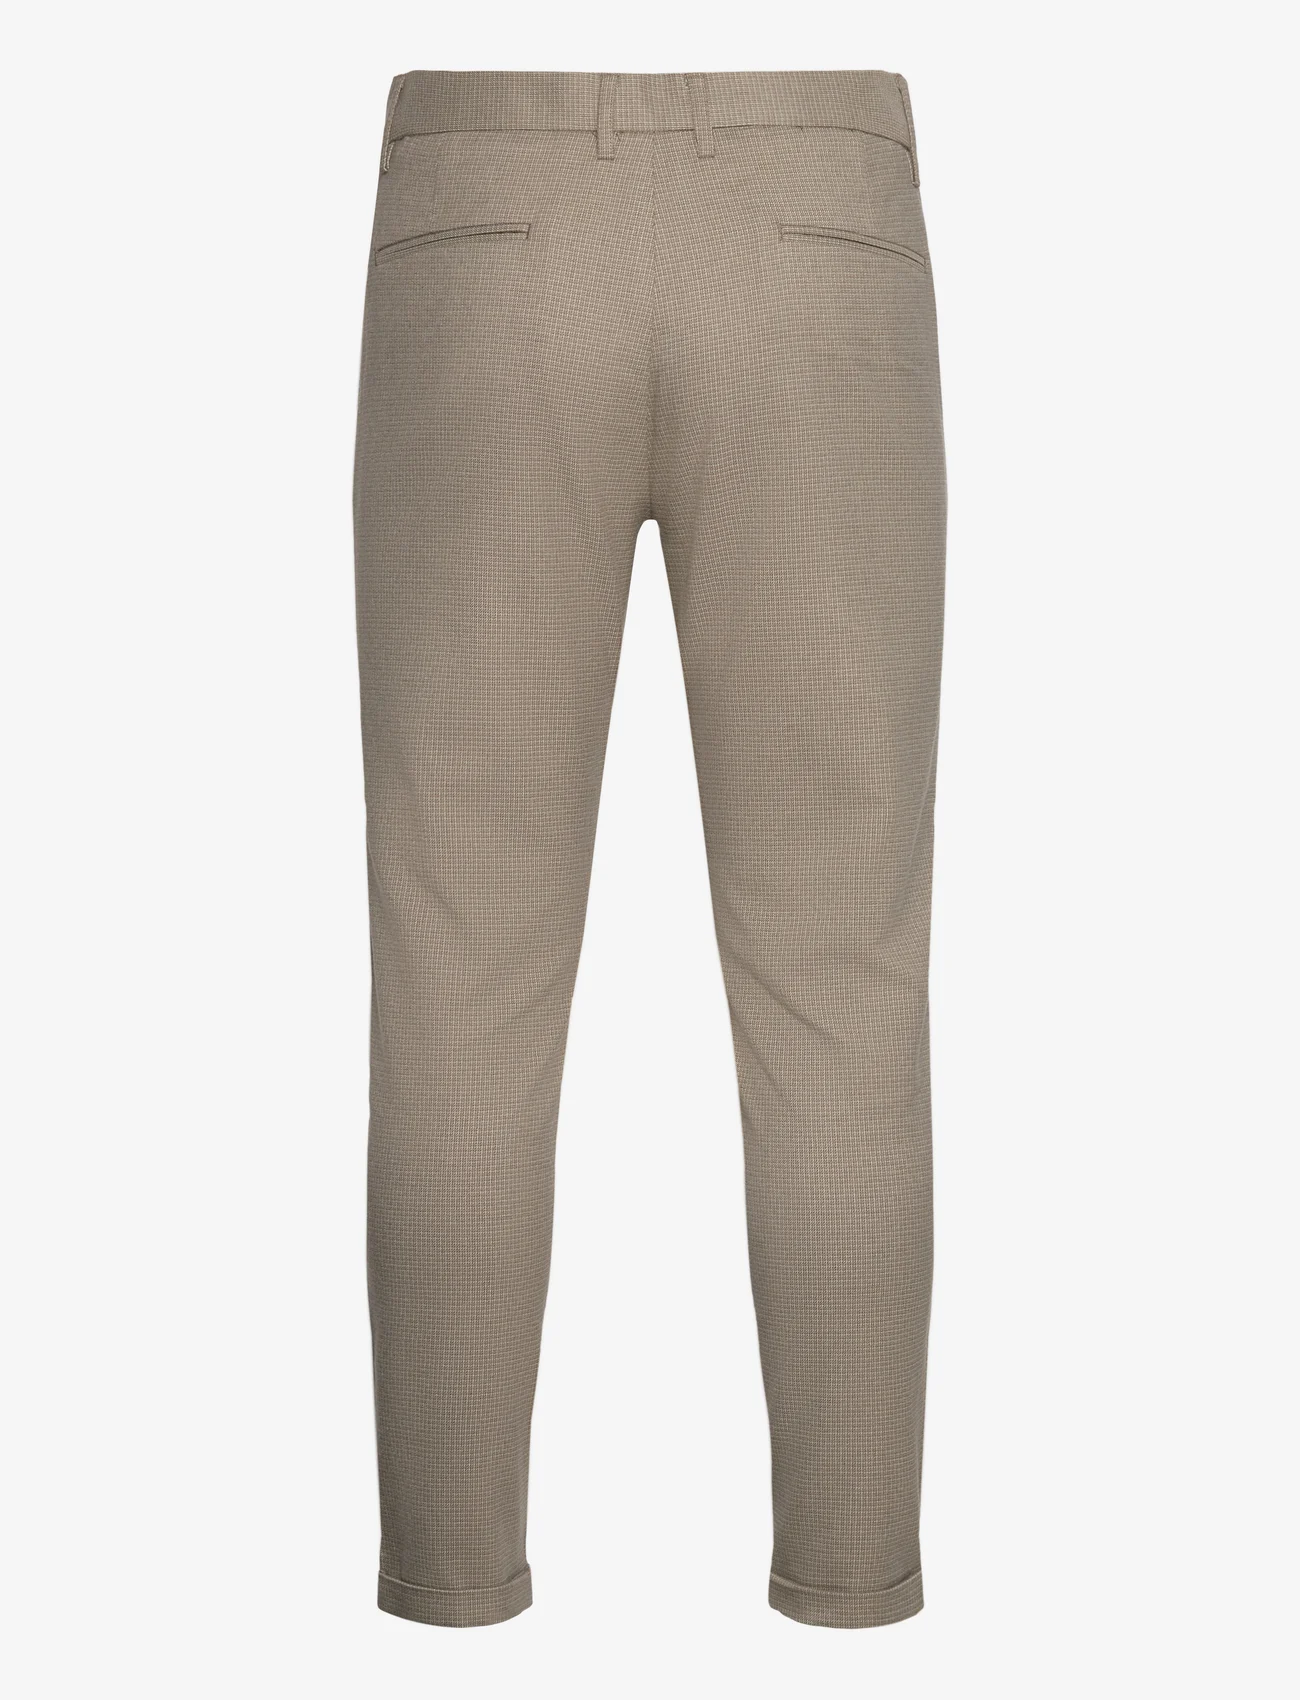 Lindbergh - Melange superflex pants - pantalons - sand mel - 1